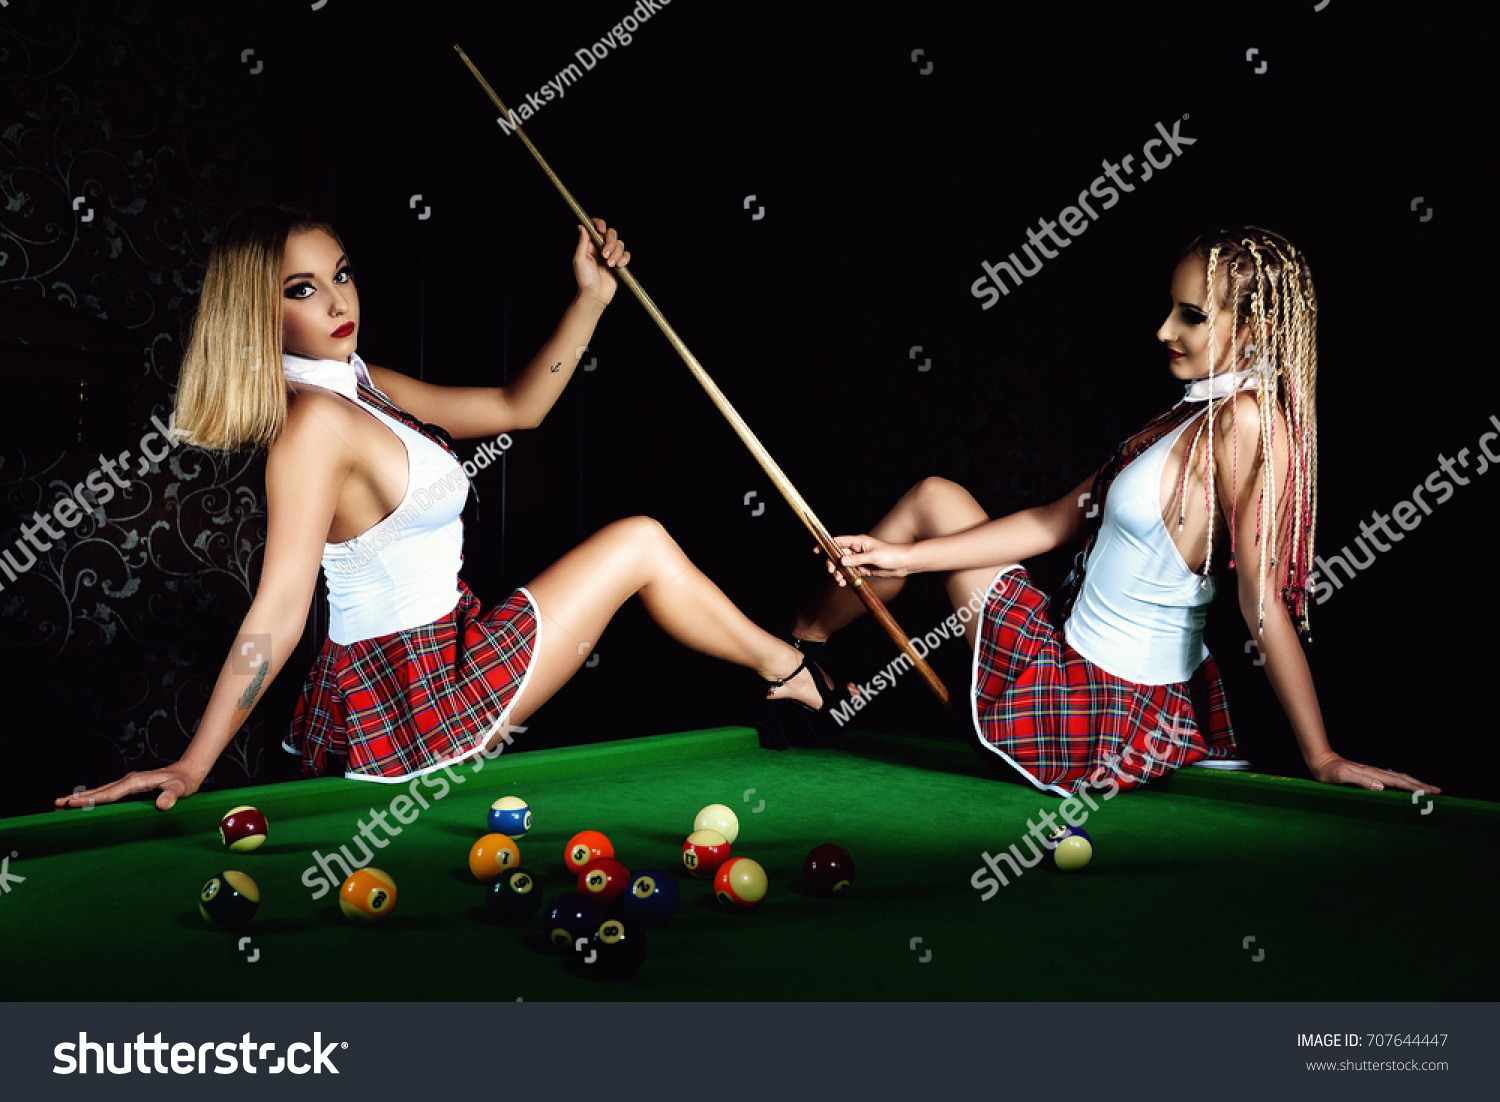 lesbian teens pool table porn gallerie